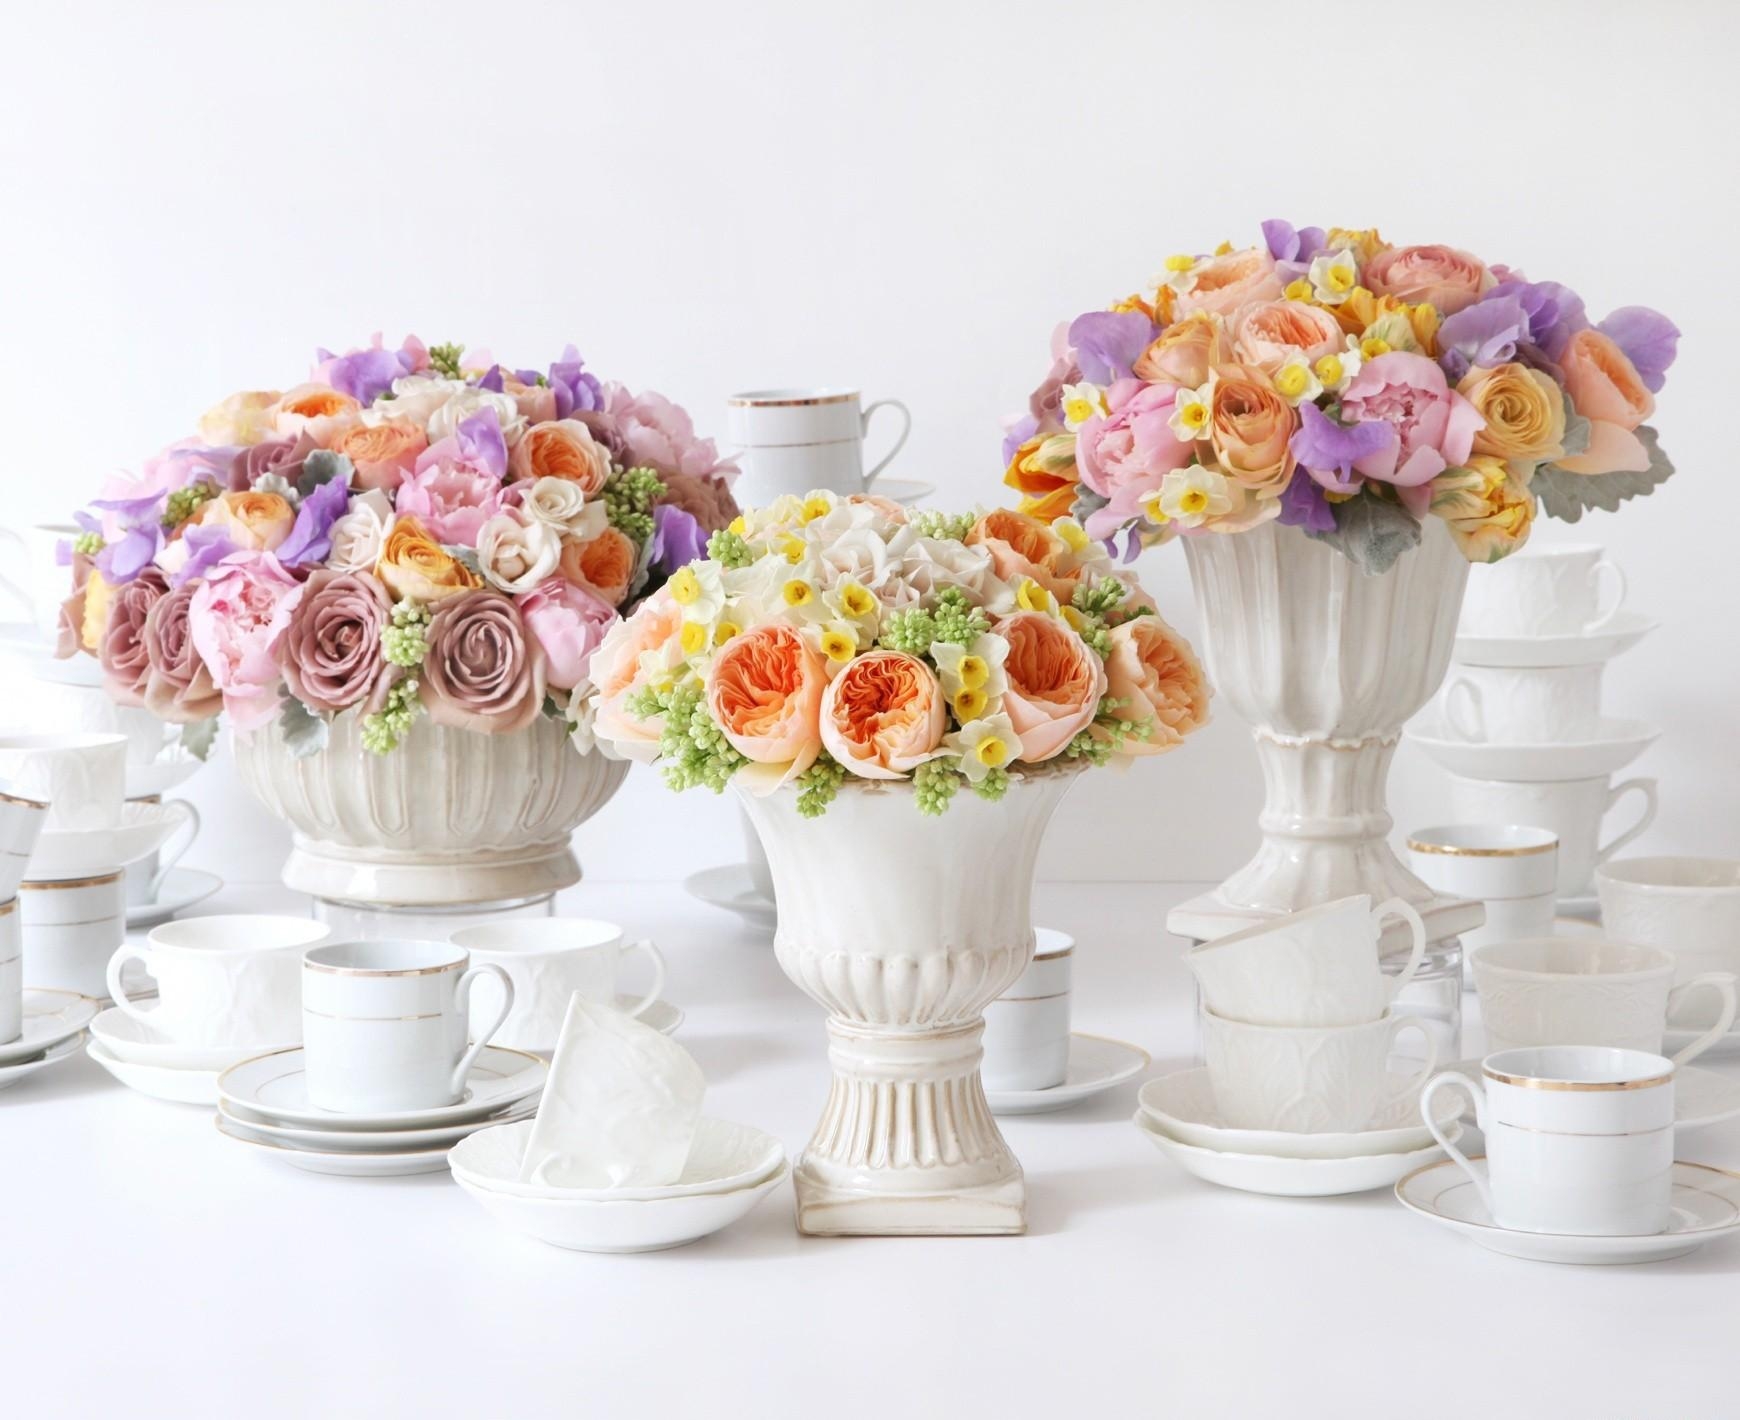 roses, narcissussi, flowers, bouquets, ranunculus, ranunkulus, vases, porcelain